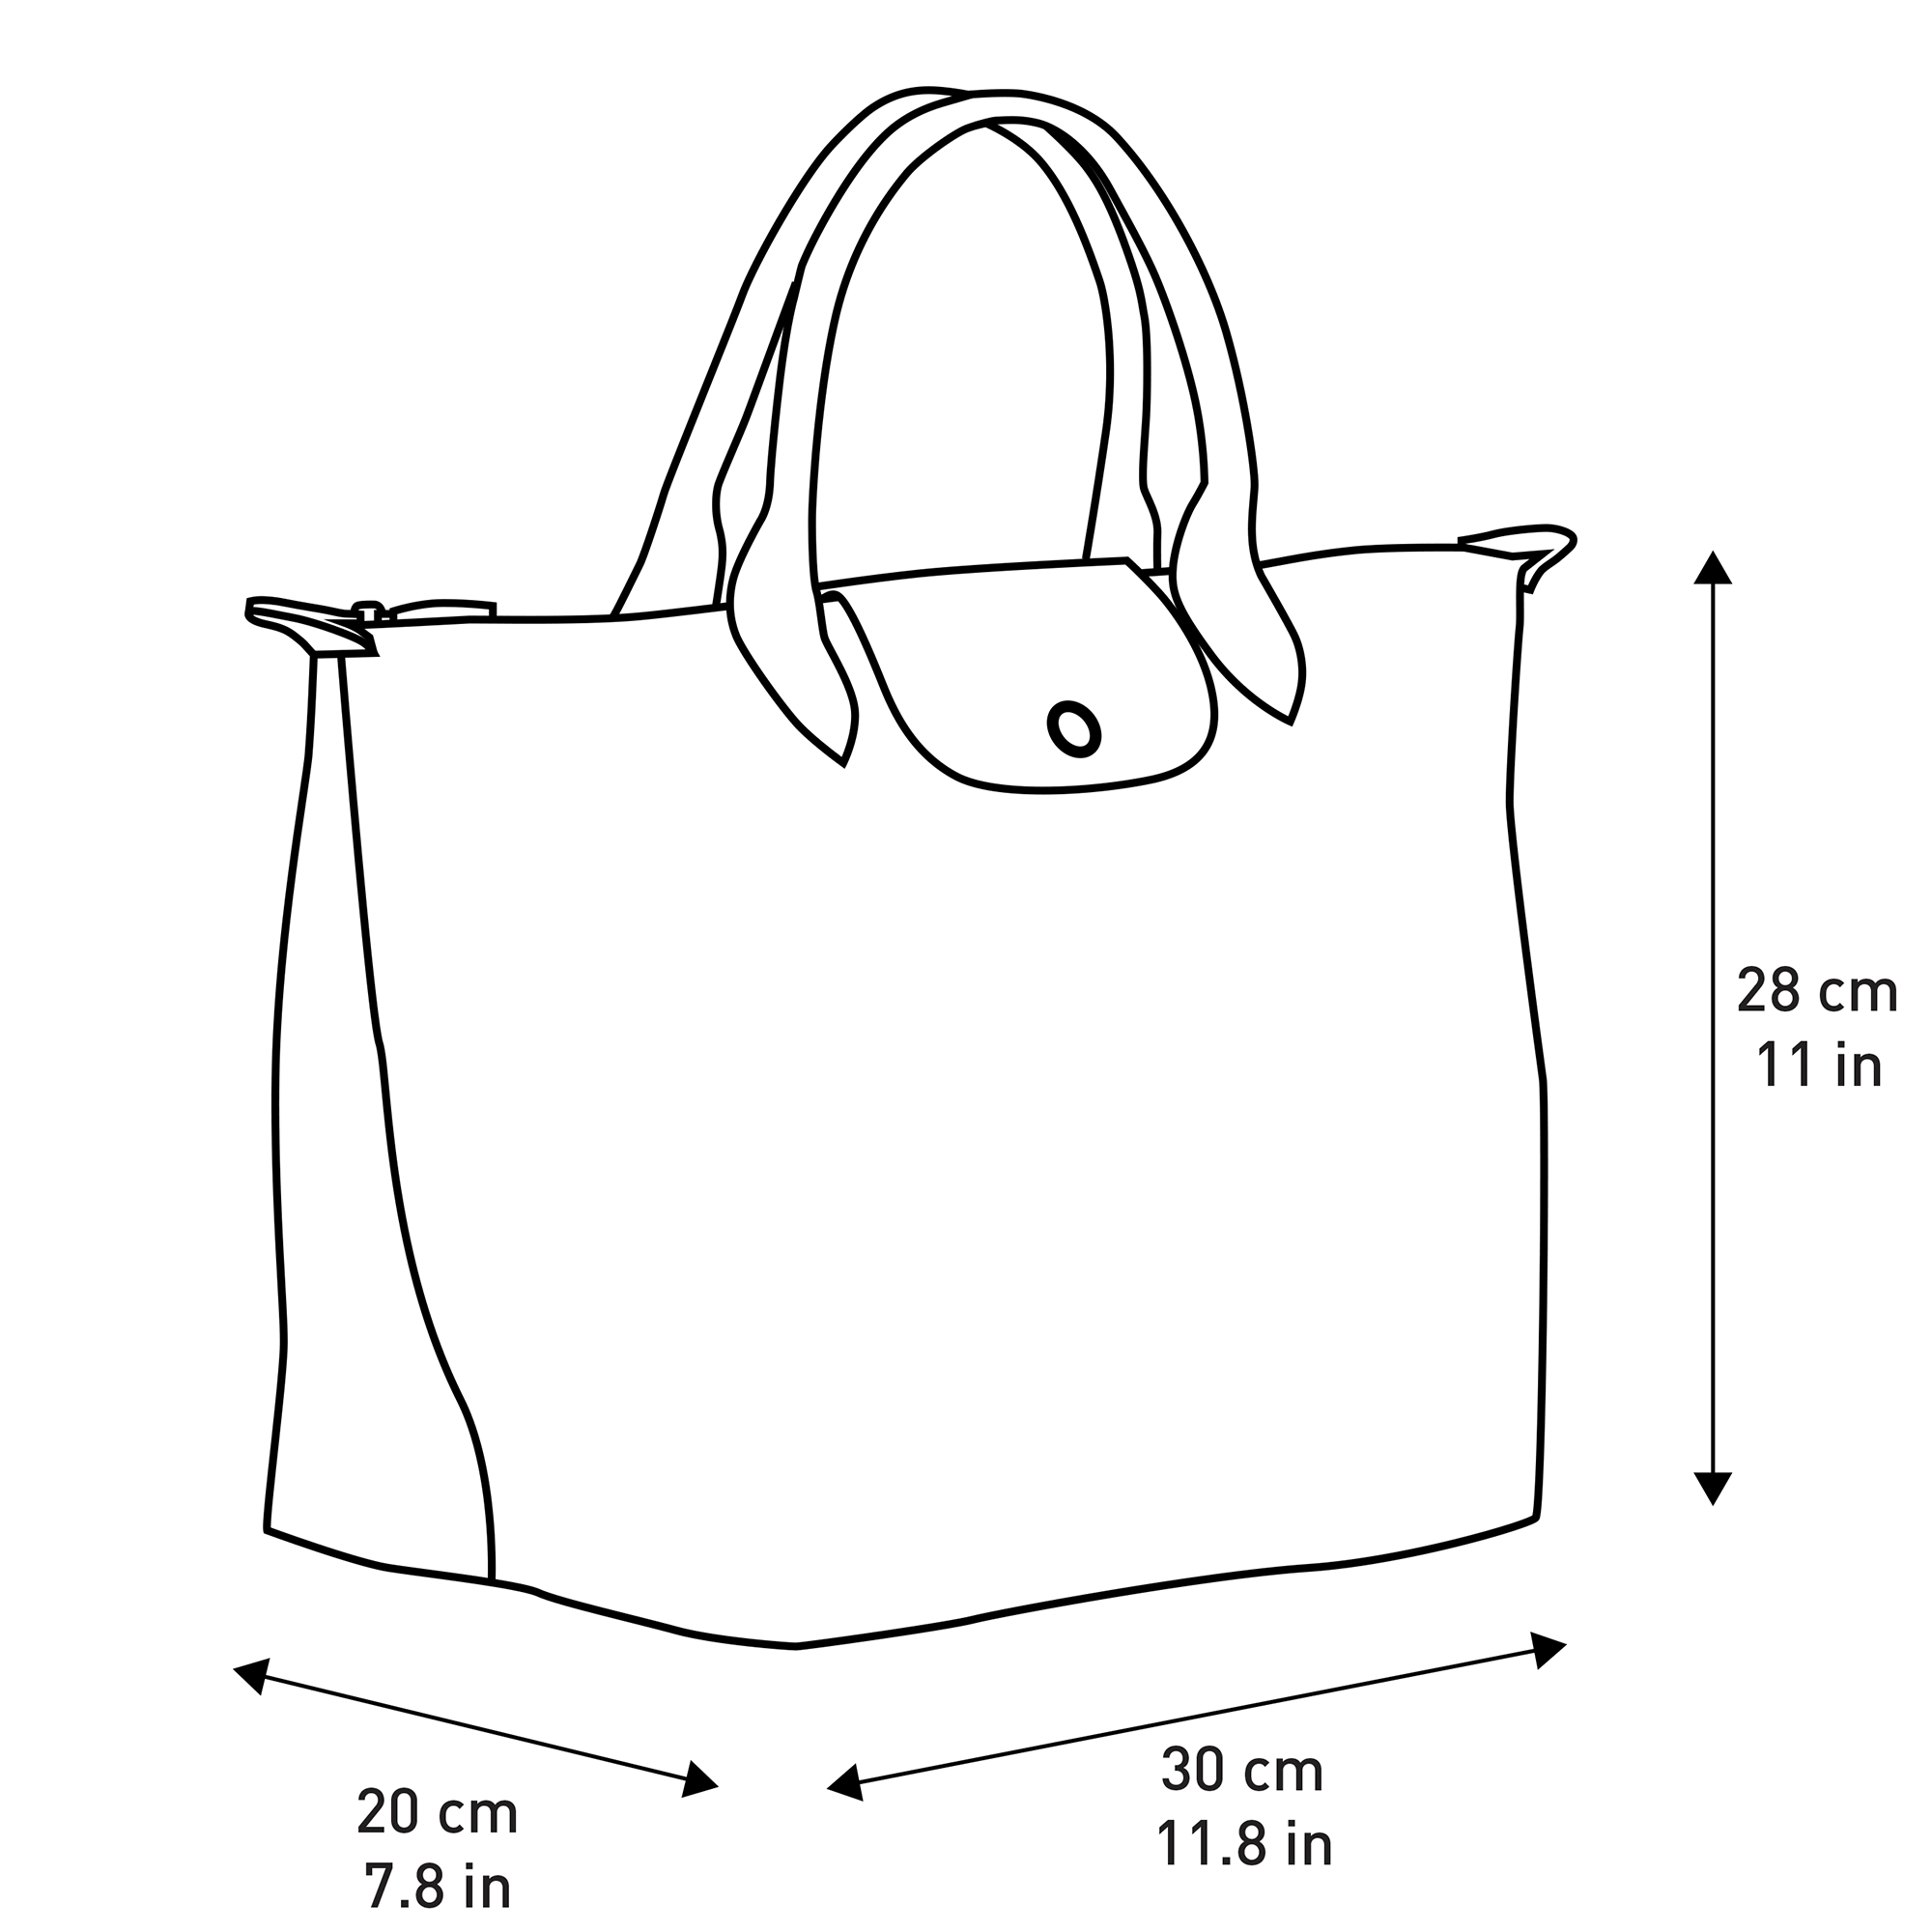 longchamp bag dimensions cm